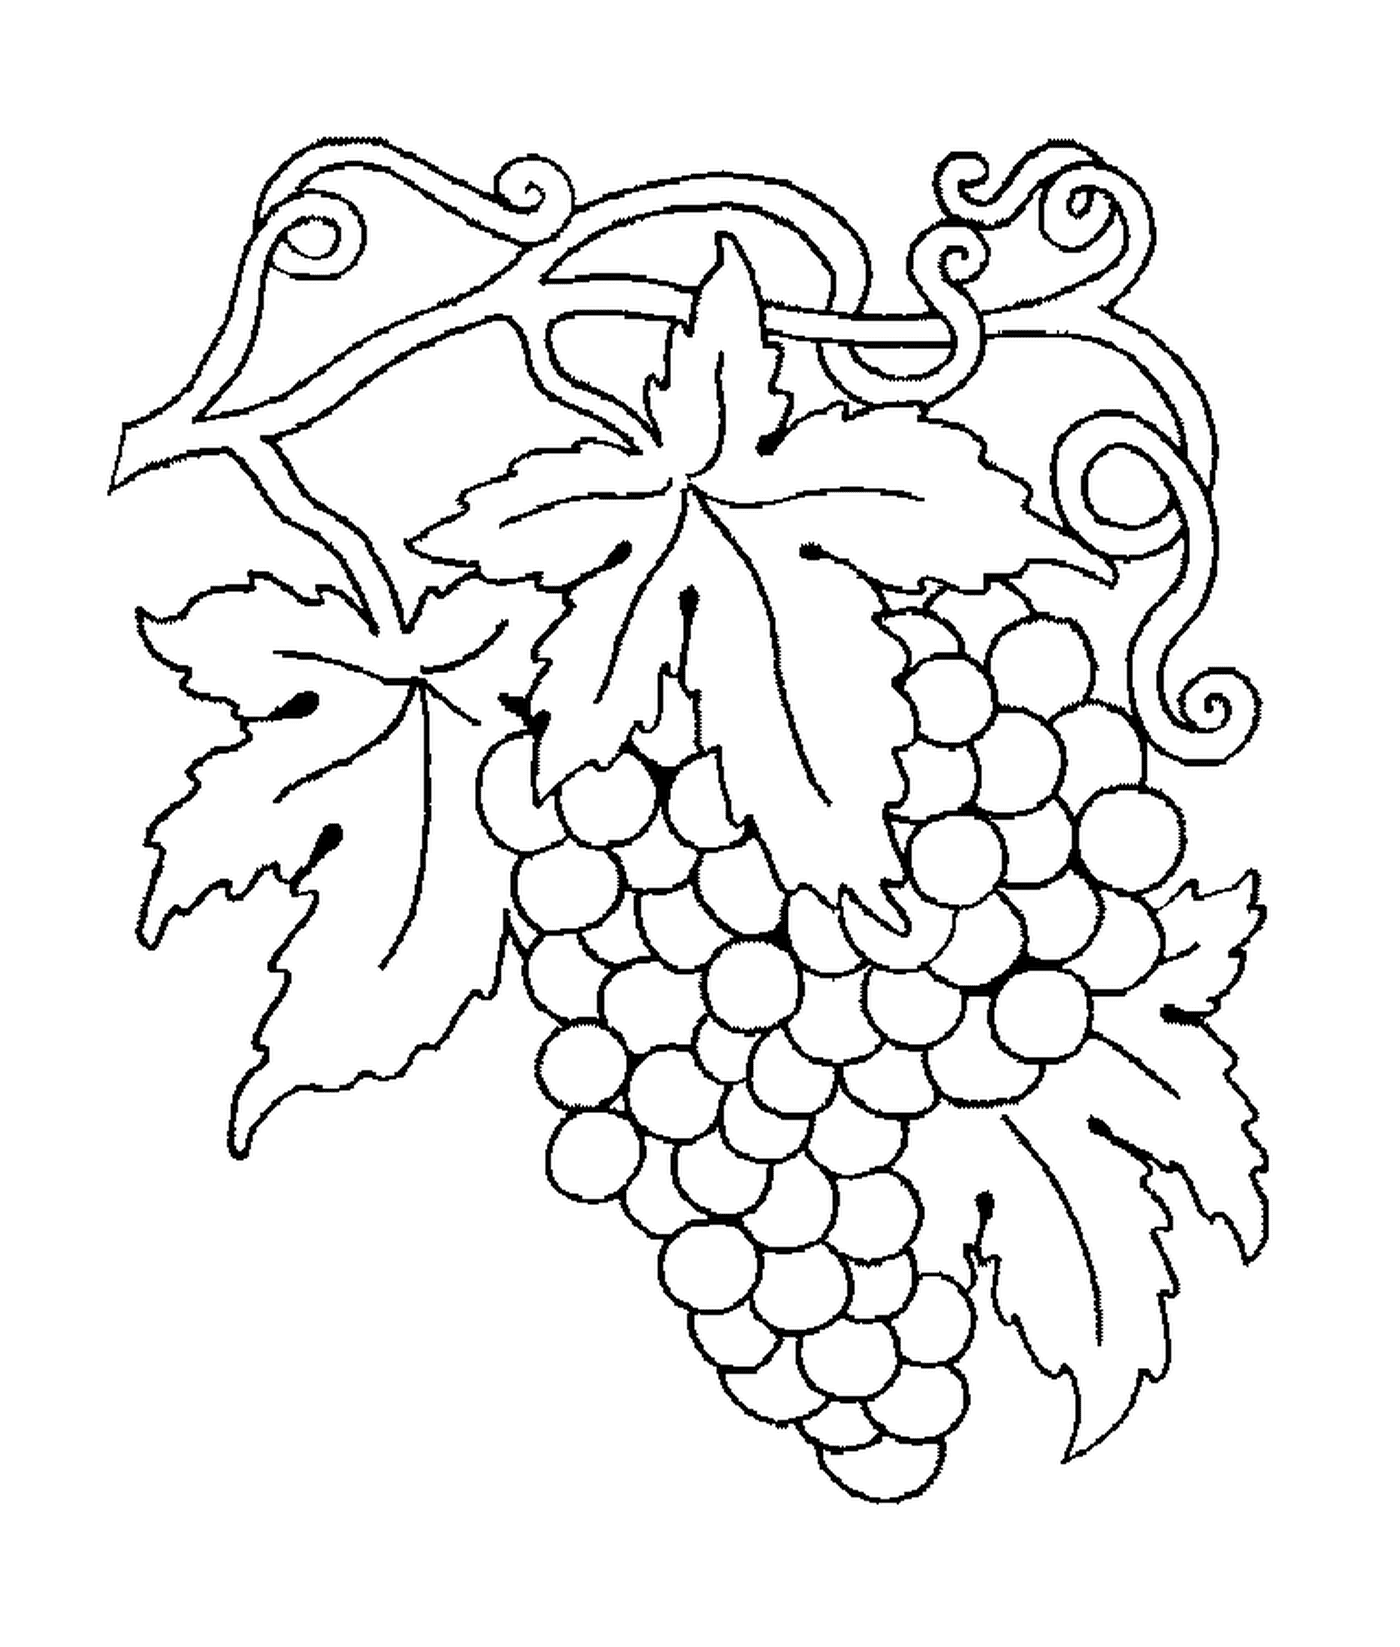  grape grapples maduros 